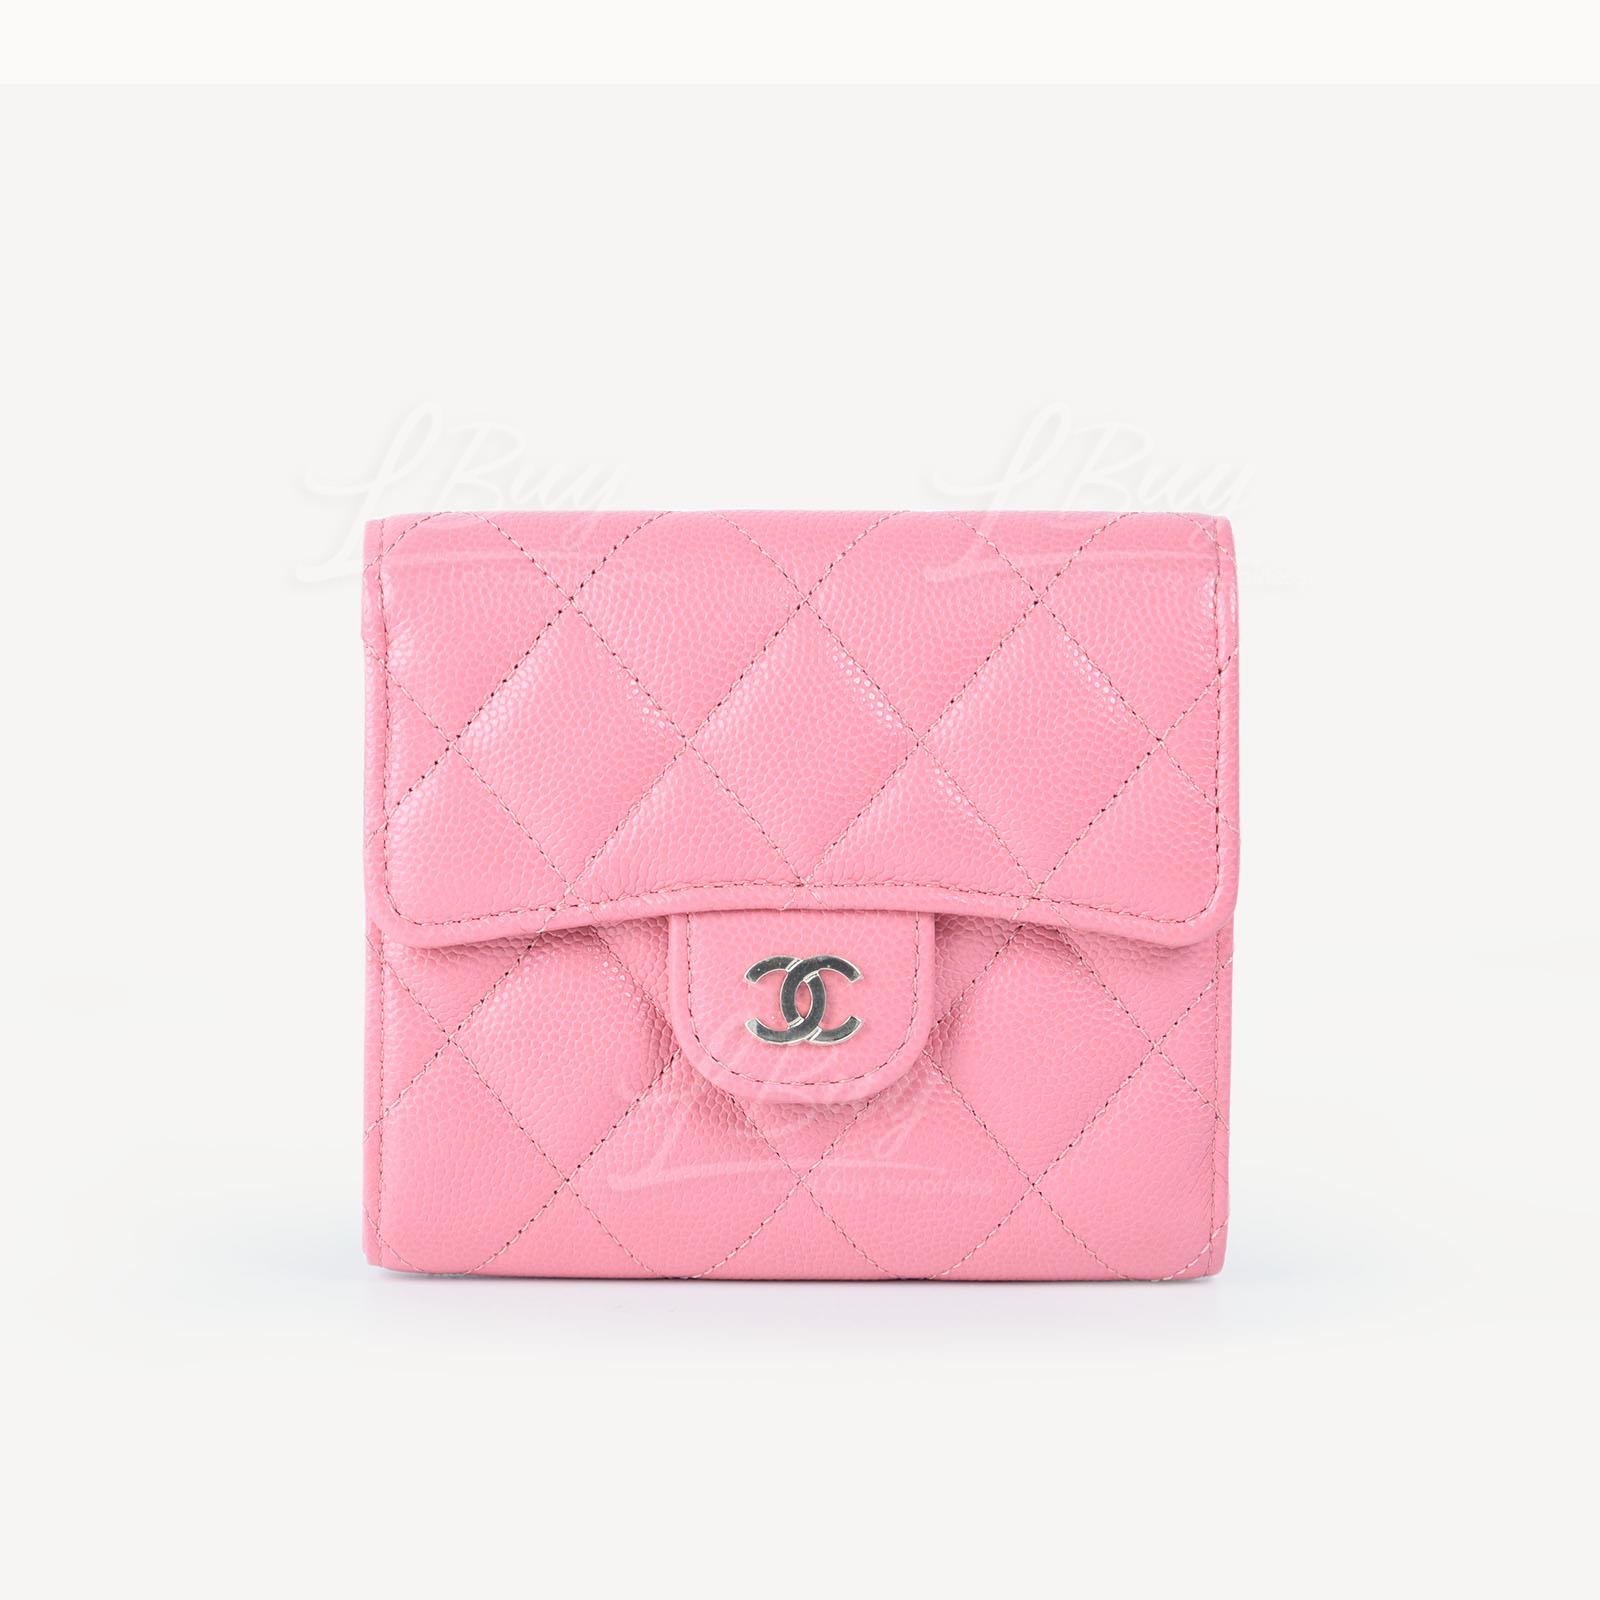 Chanel Long Flap Wallet AP3517 B13703 NQ388, Pink, One Size